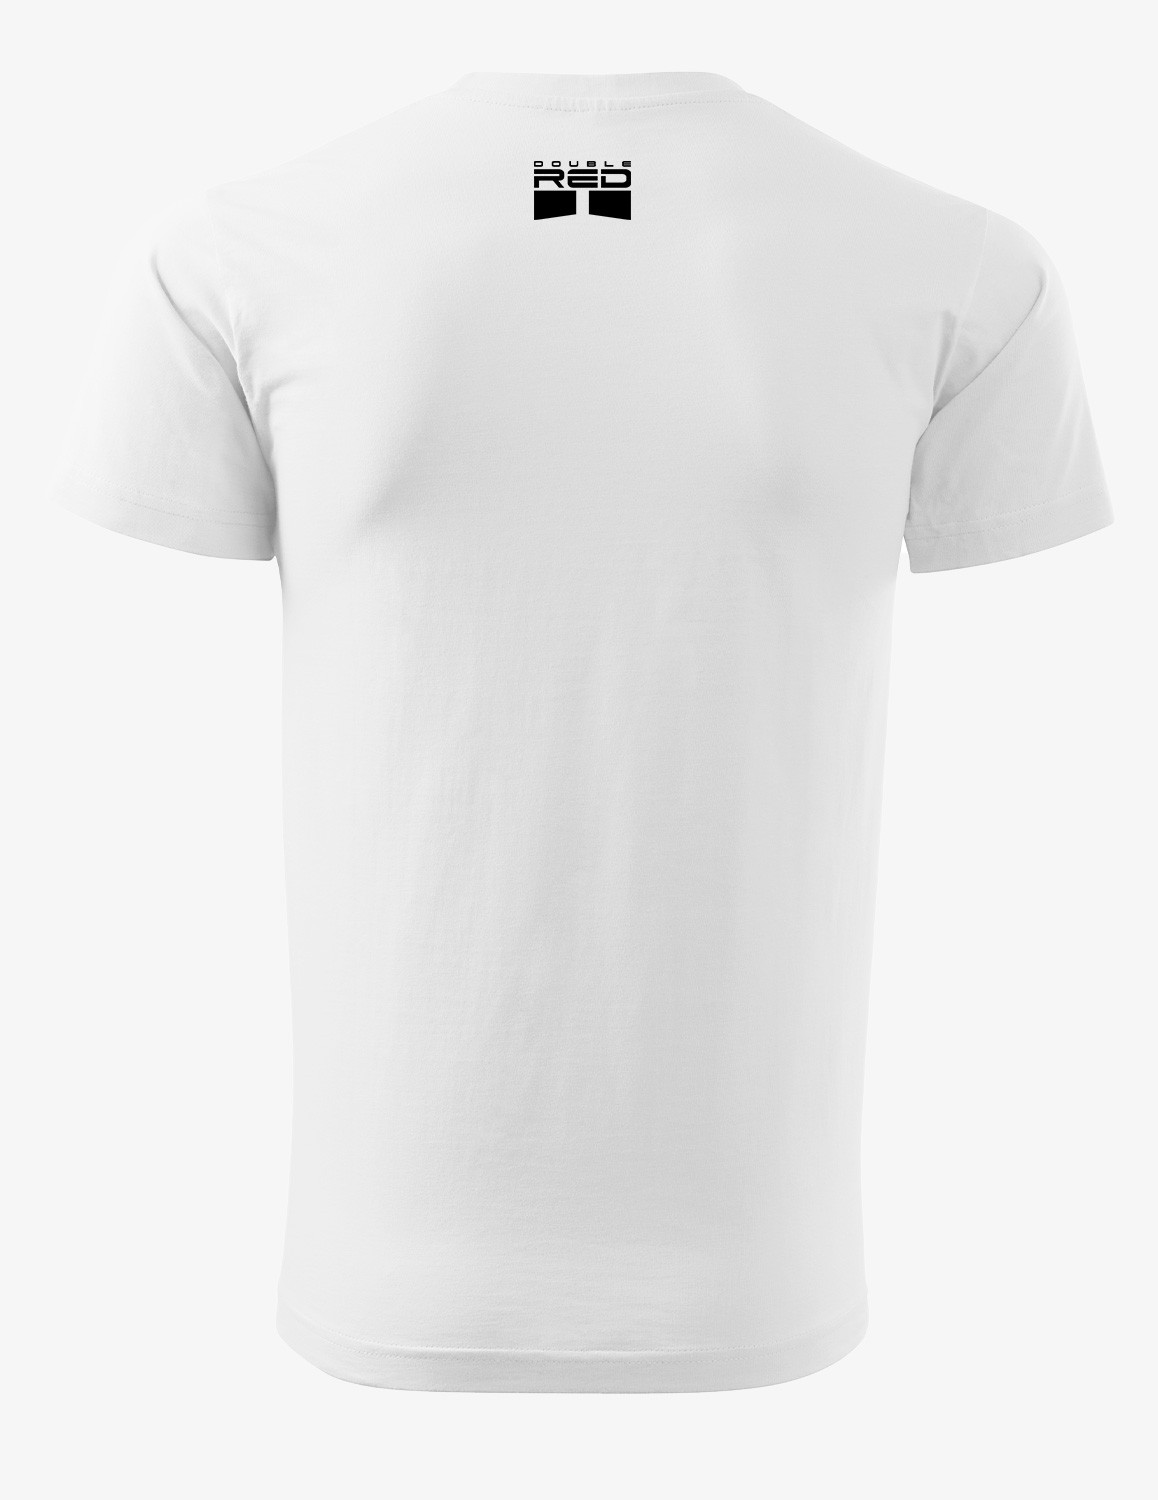 T-shirt CAMODRESSCODE™ White/Turquoise